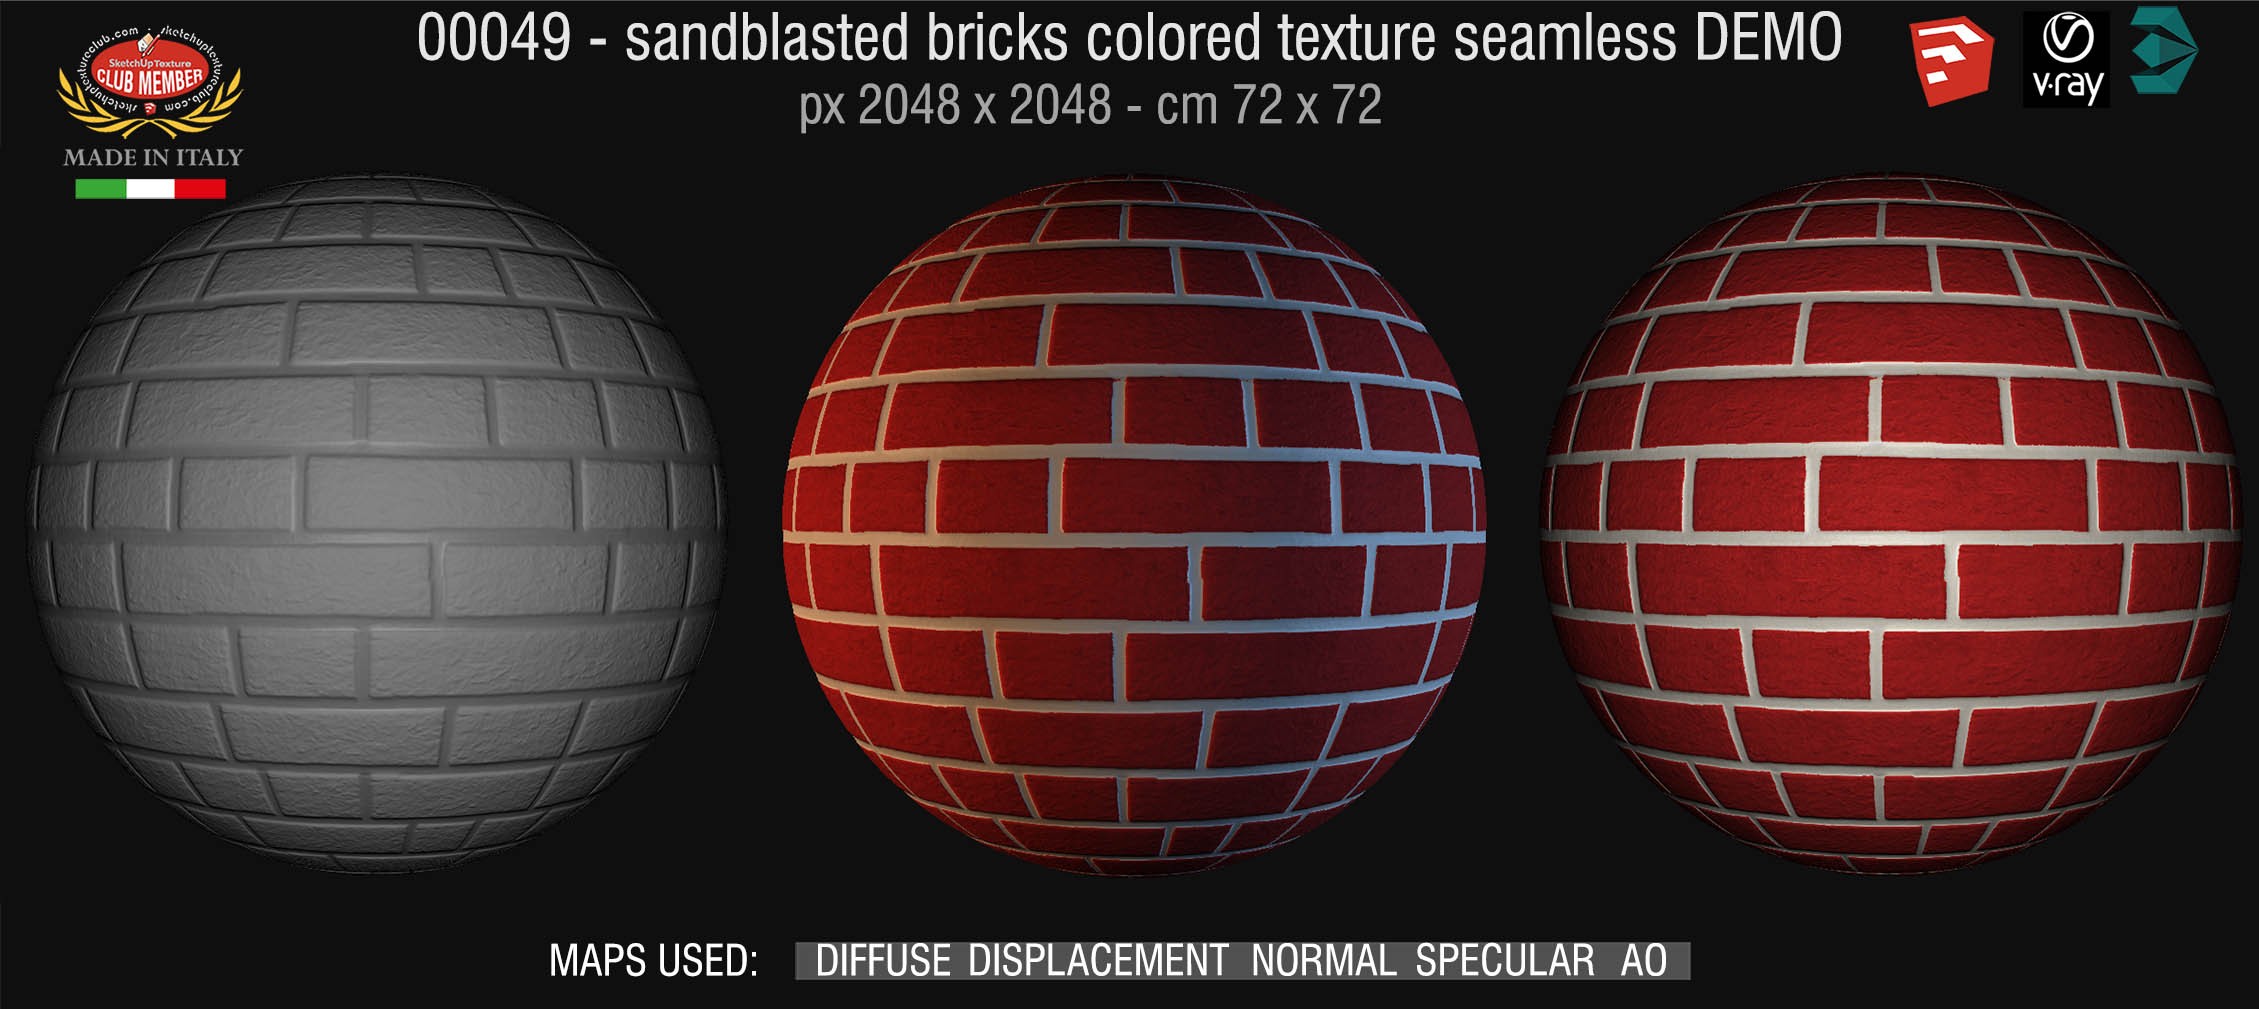 00049 Sandblasted bricks colored texture seamless + maps DEMO